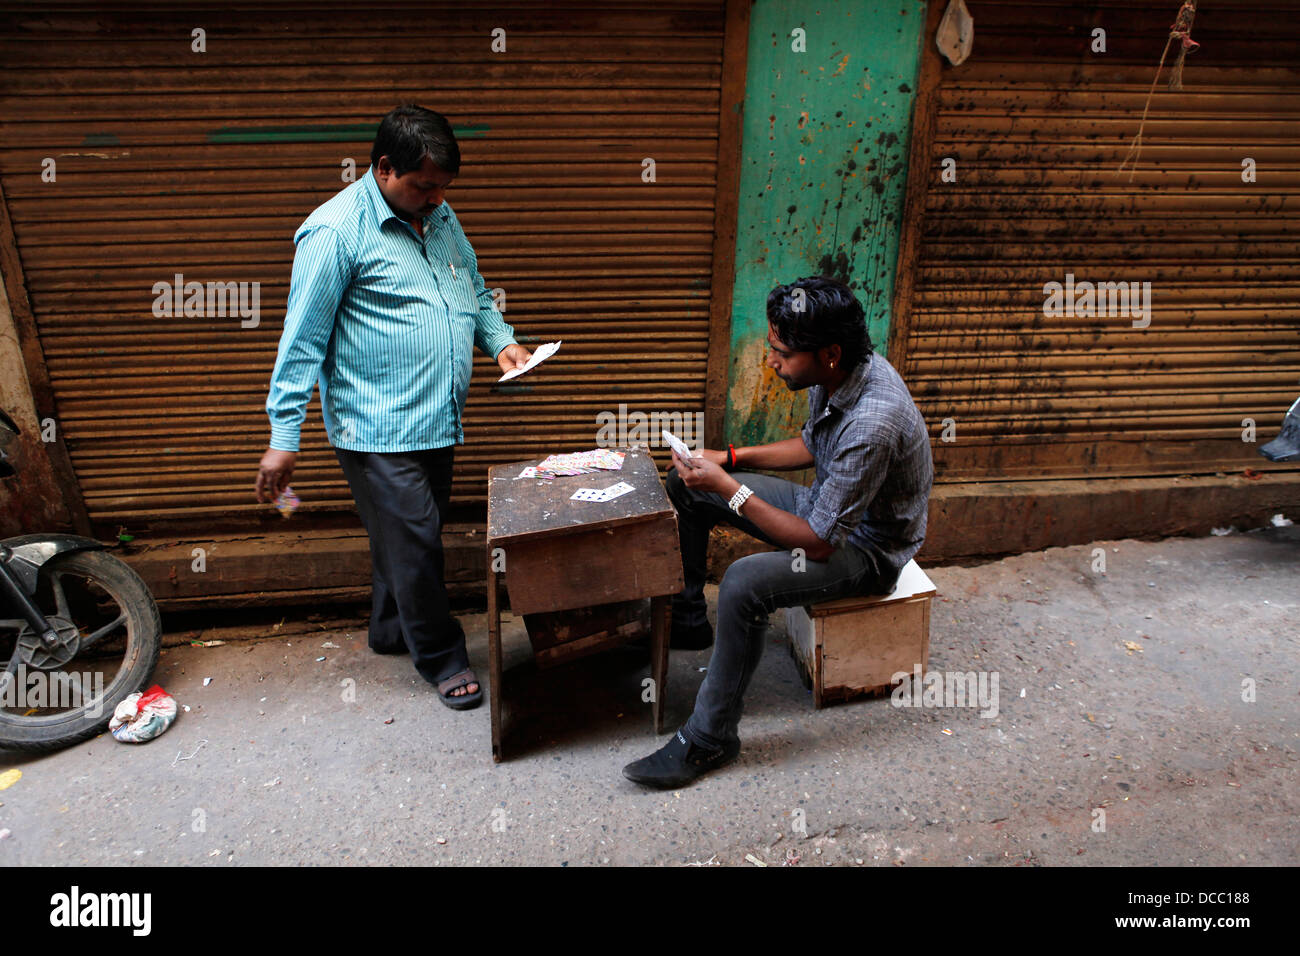 Deux hommes jouent un jeu de cartes à Varanasi, Inde Banque D'Images